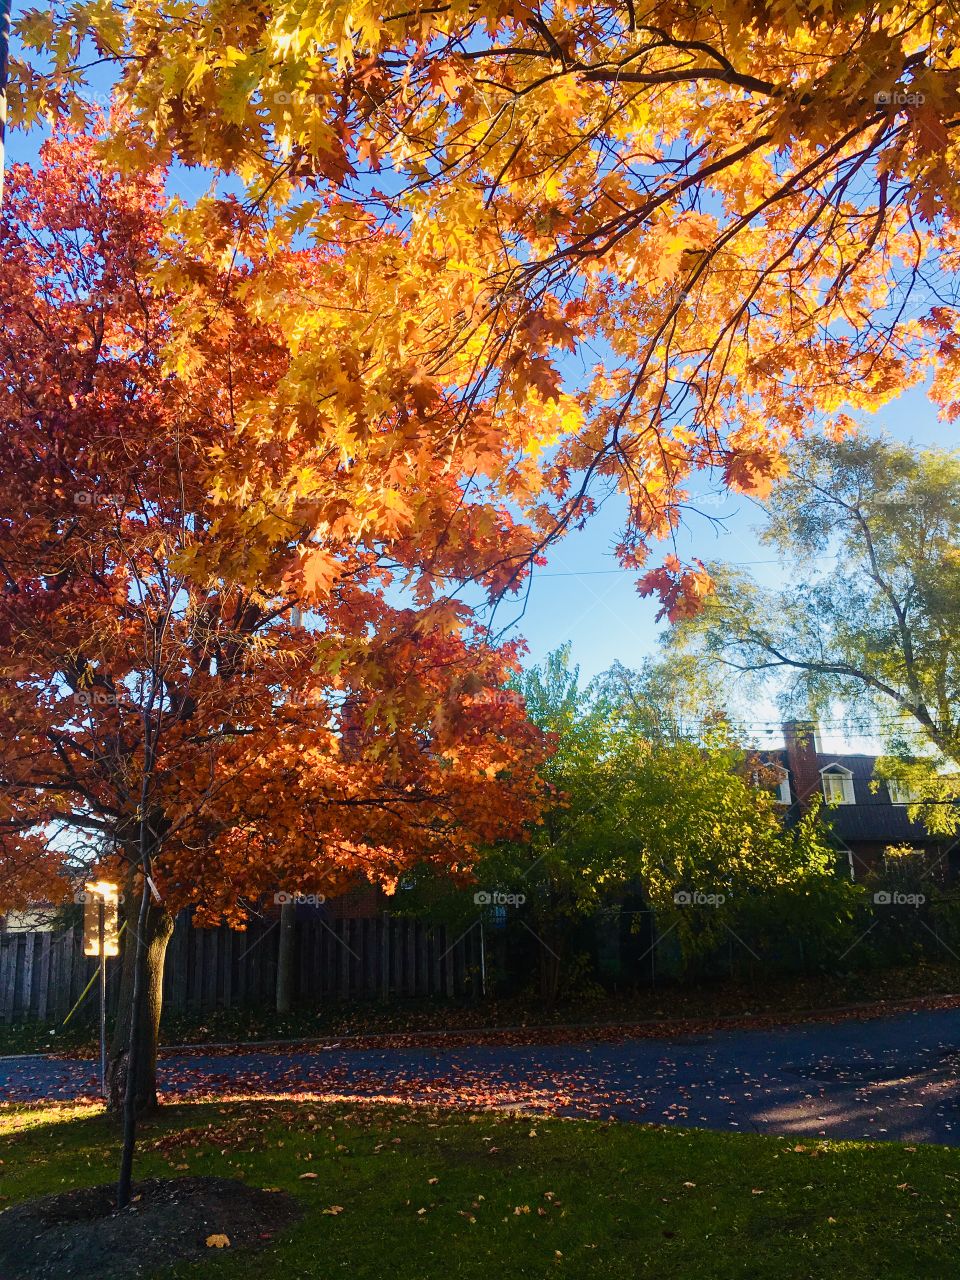 Autumn Tree 04-October 26 2018- Montreal, Quebec, Canada 